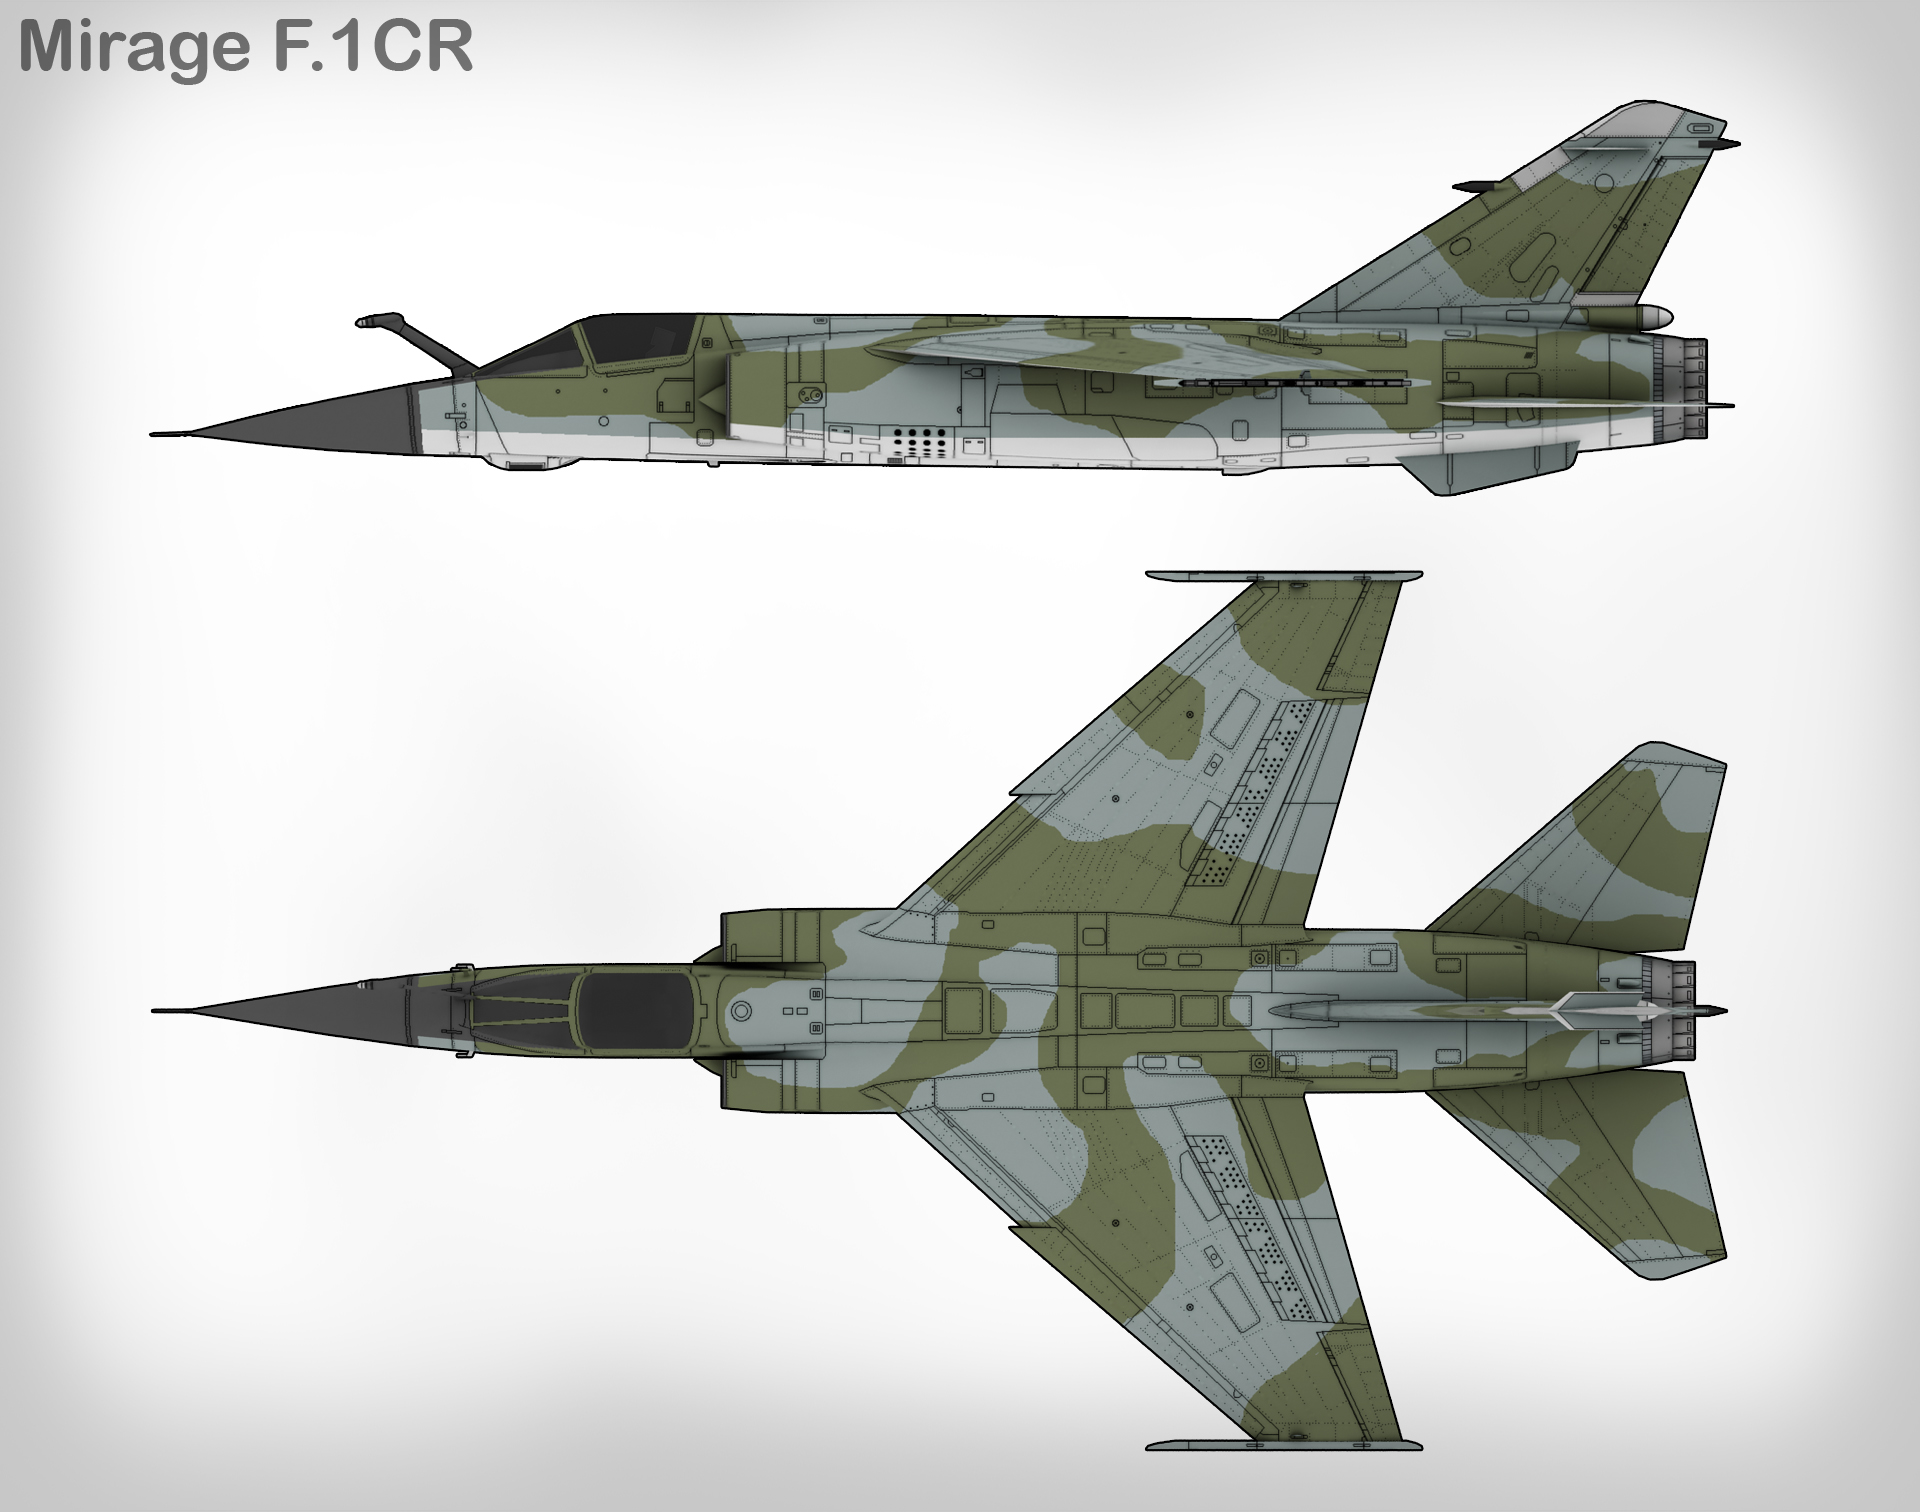 Мираж моды. Mirage f1 чертеж. Mirage f.1c. Бомбардировщик Мираж 4а. Mirage f.1 CR.